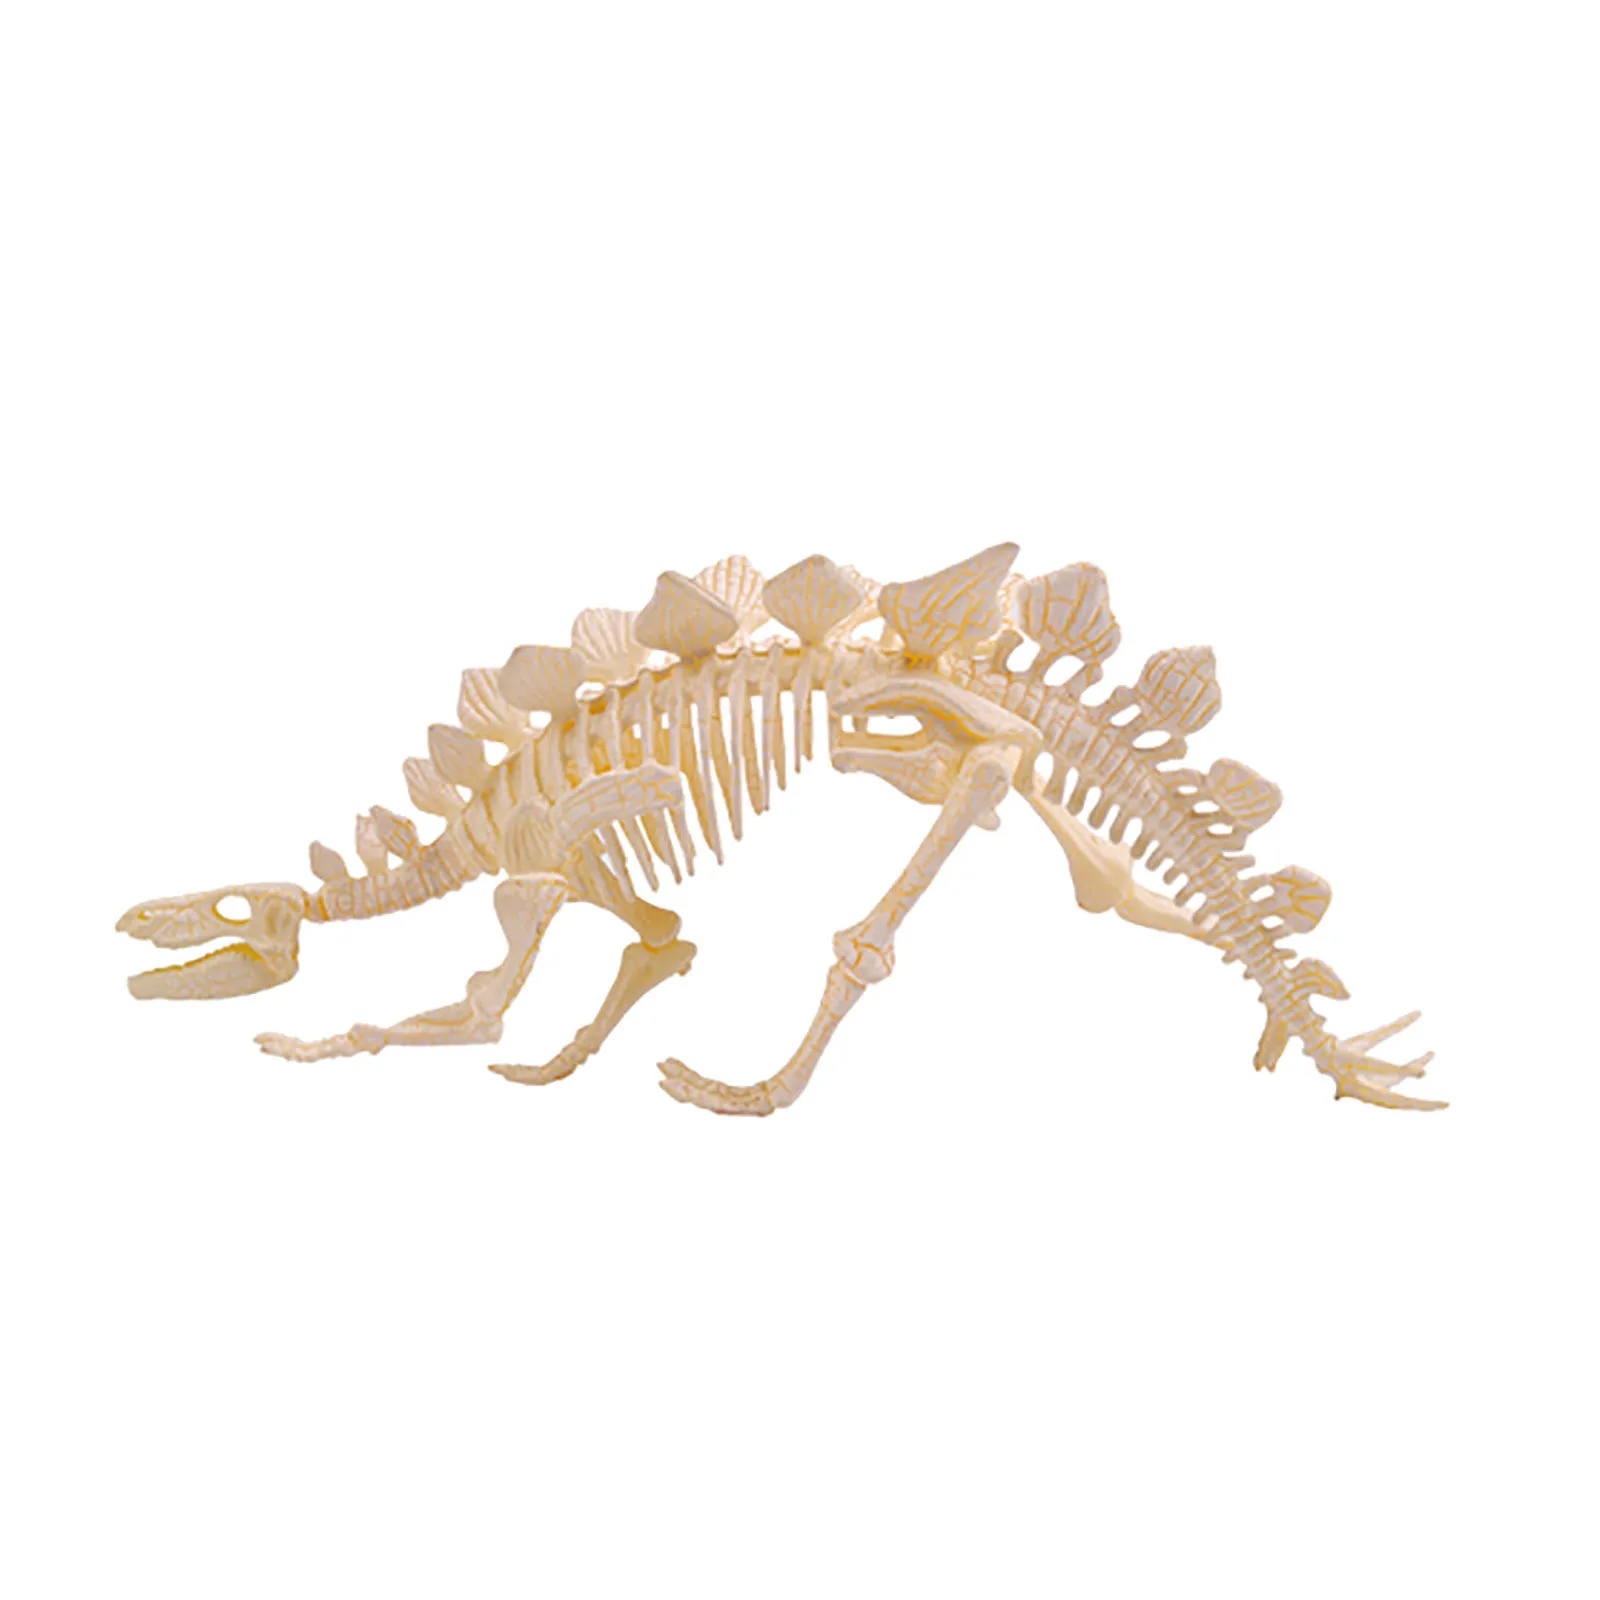 

Dinosaur Fossil Excavation Kits Education Archeology Exquisite Jurassic Toy Set Game Action Children Figure Skeleton Model Gift